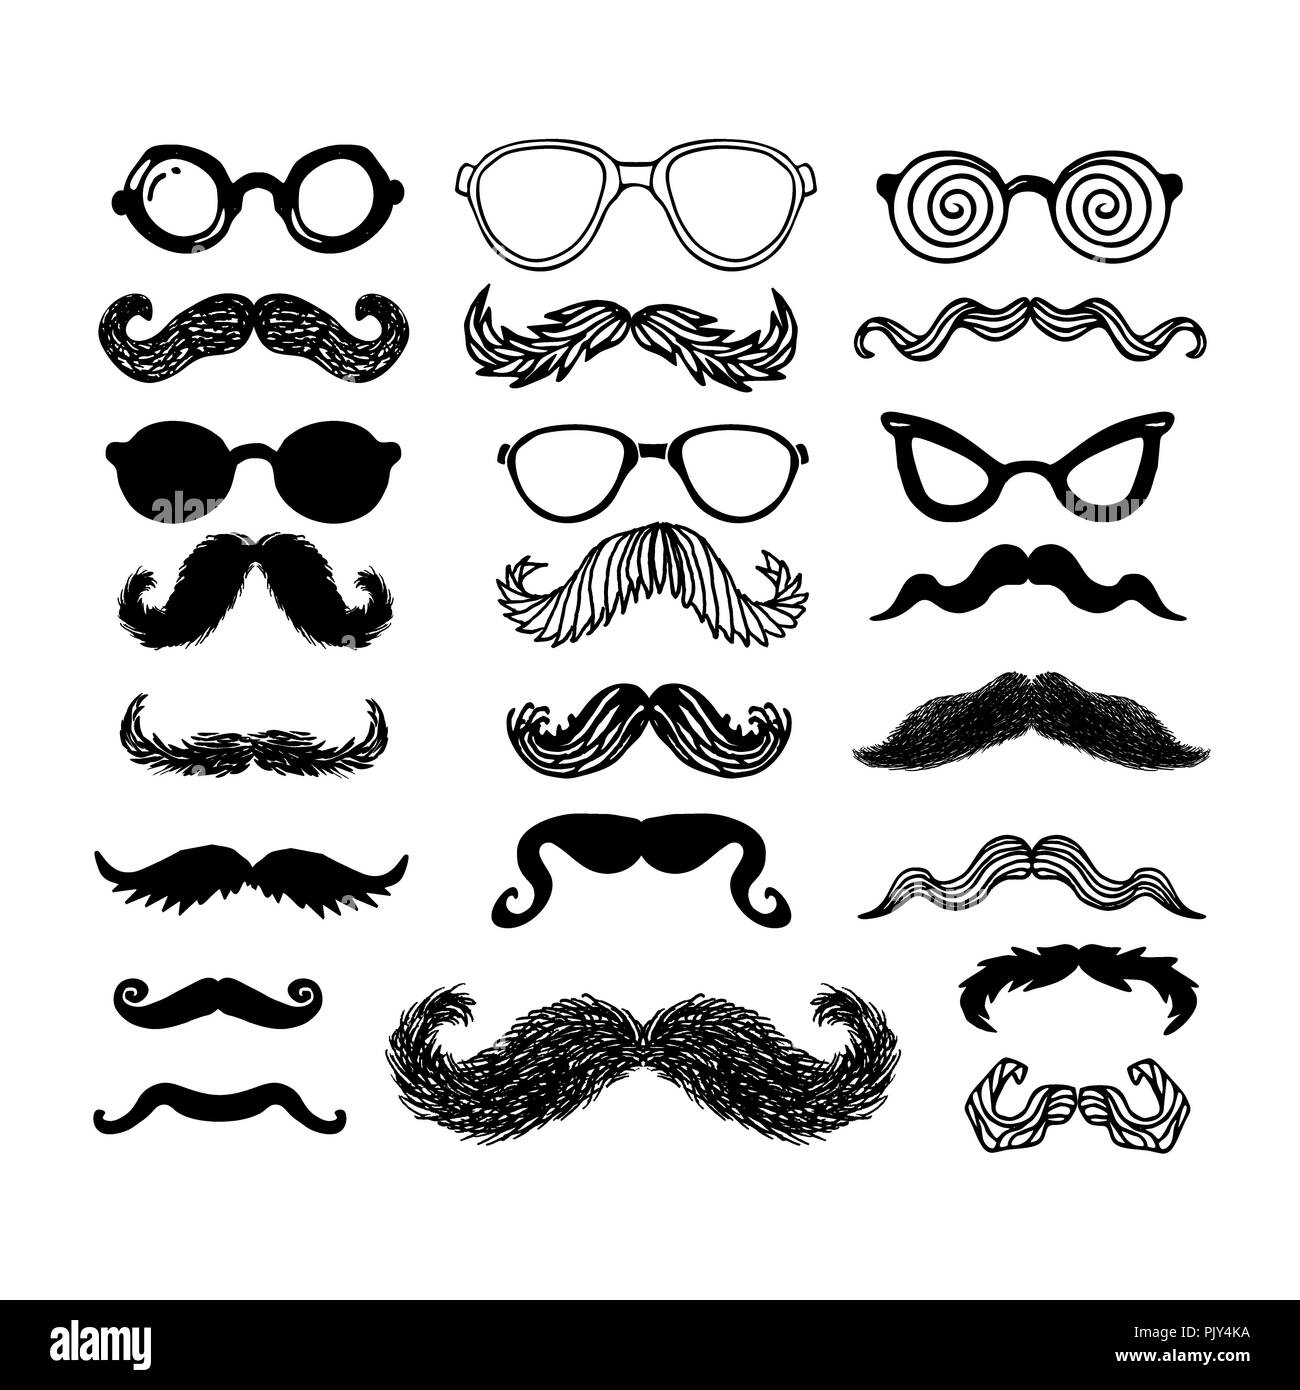 Moustache or mustache. Movember vector icons set Stock Photo